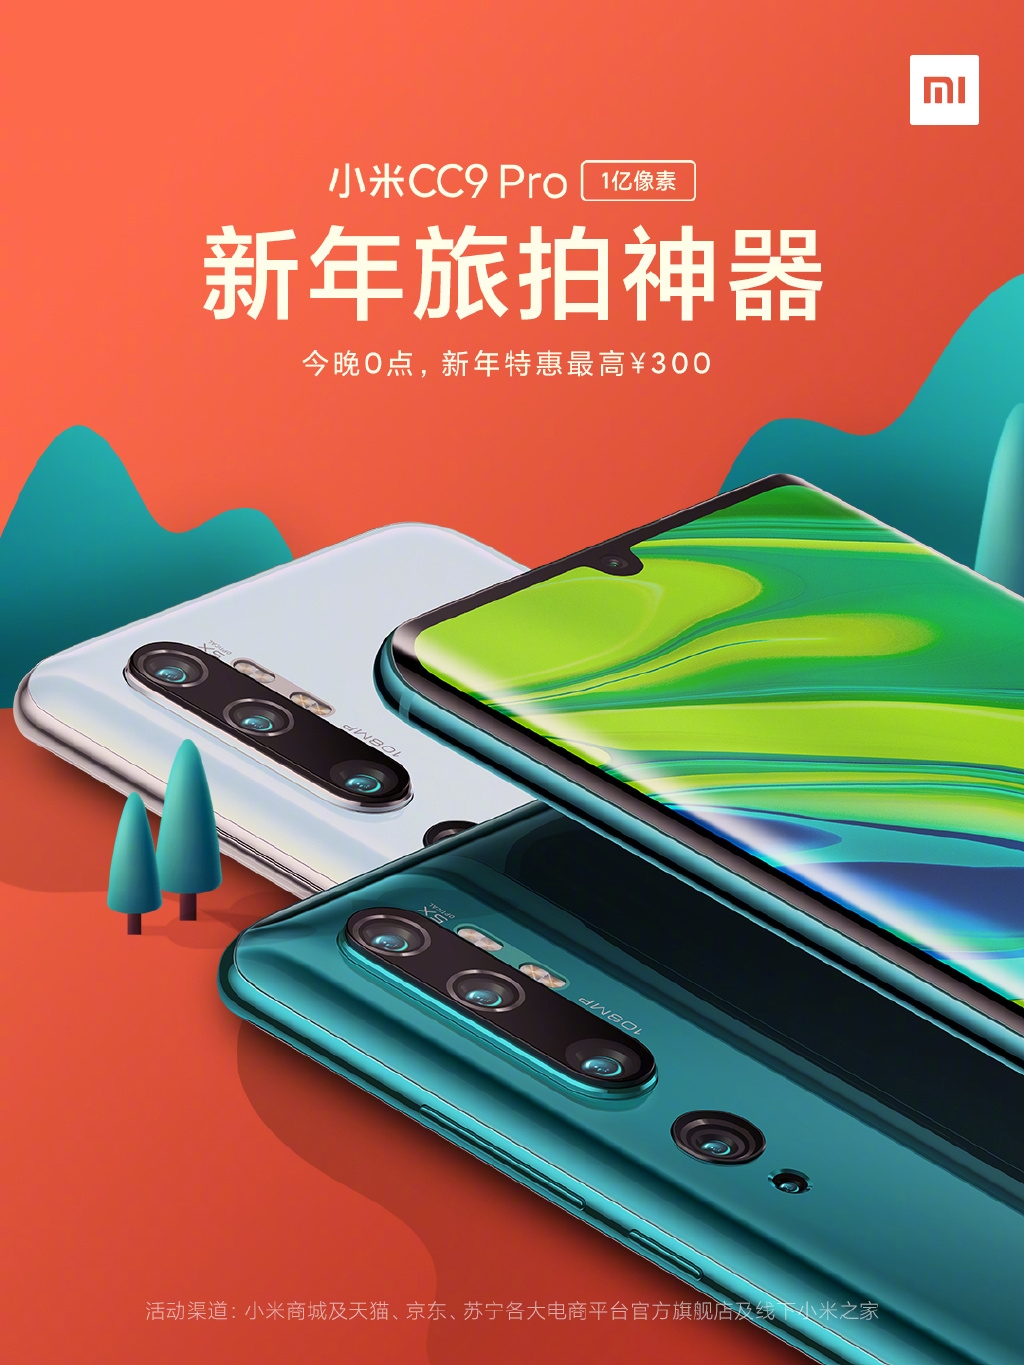 Xiaomi Mi CC9 Pro Price Cut China